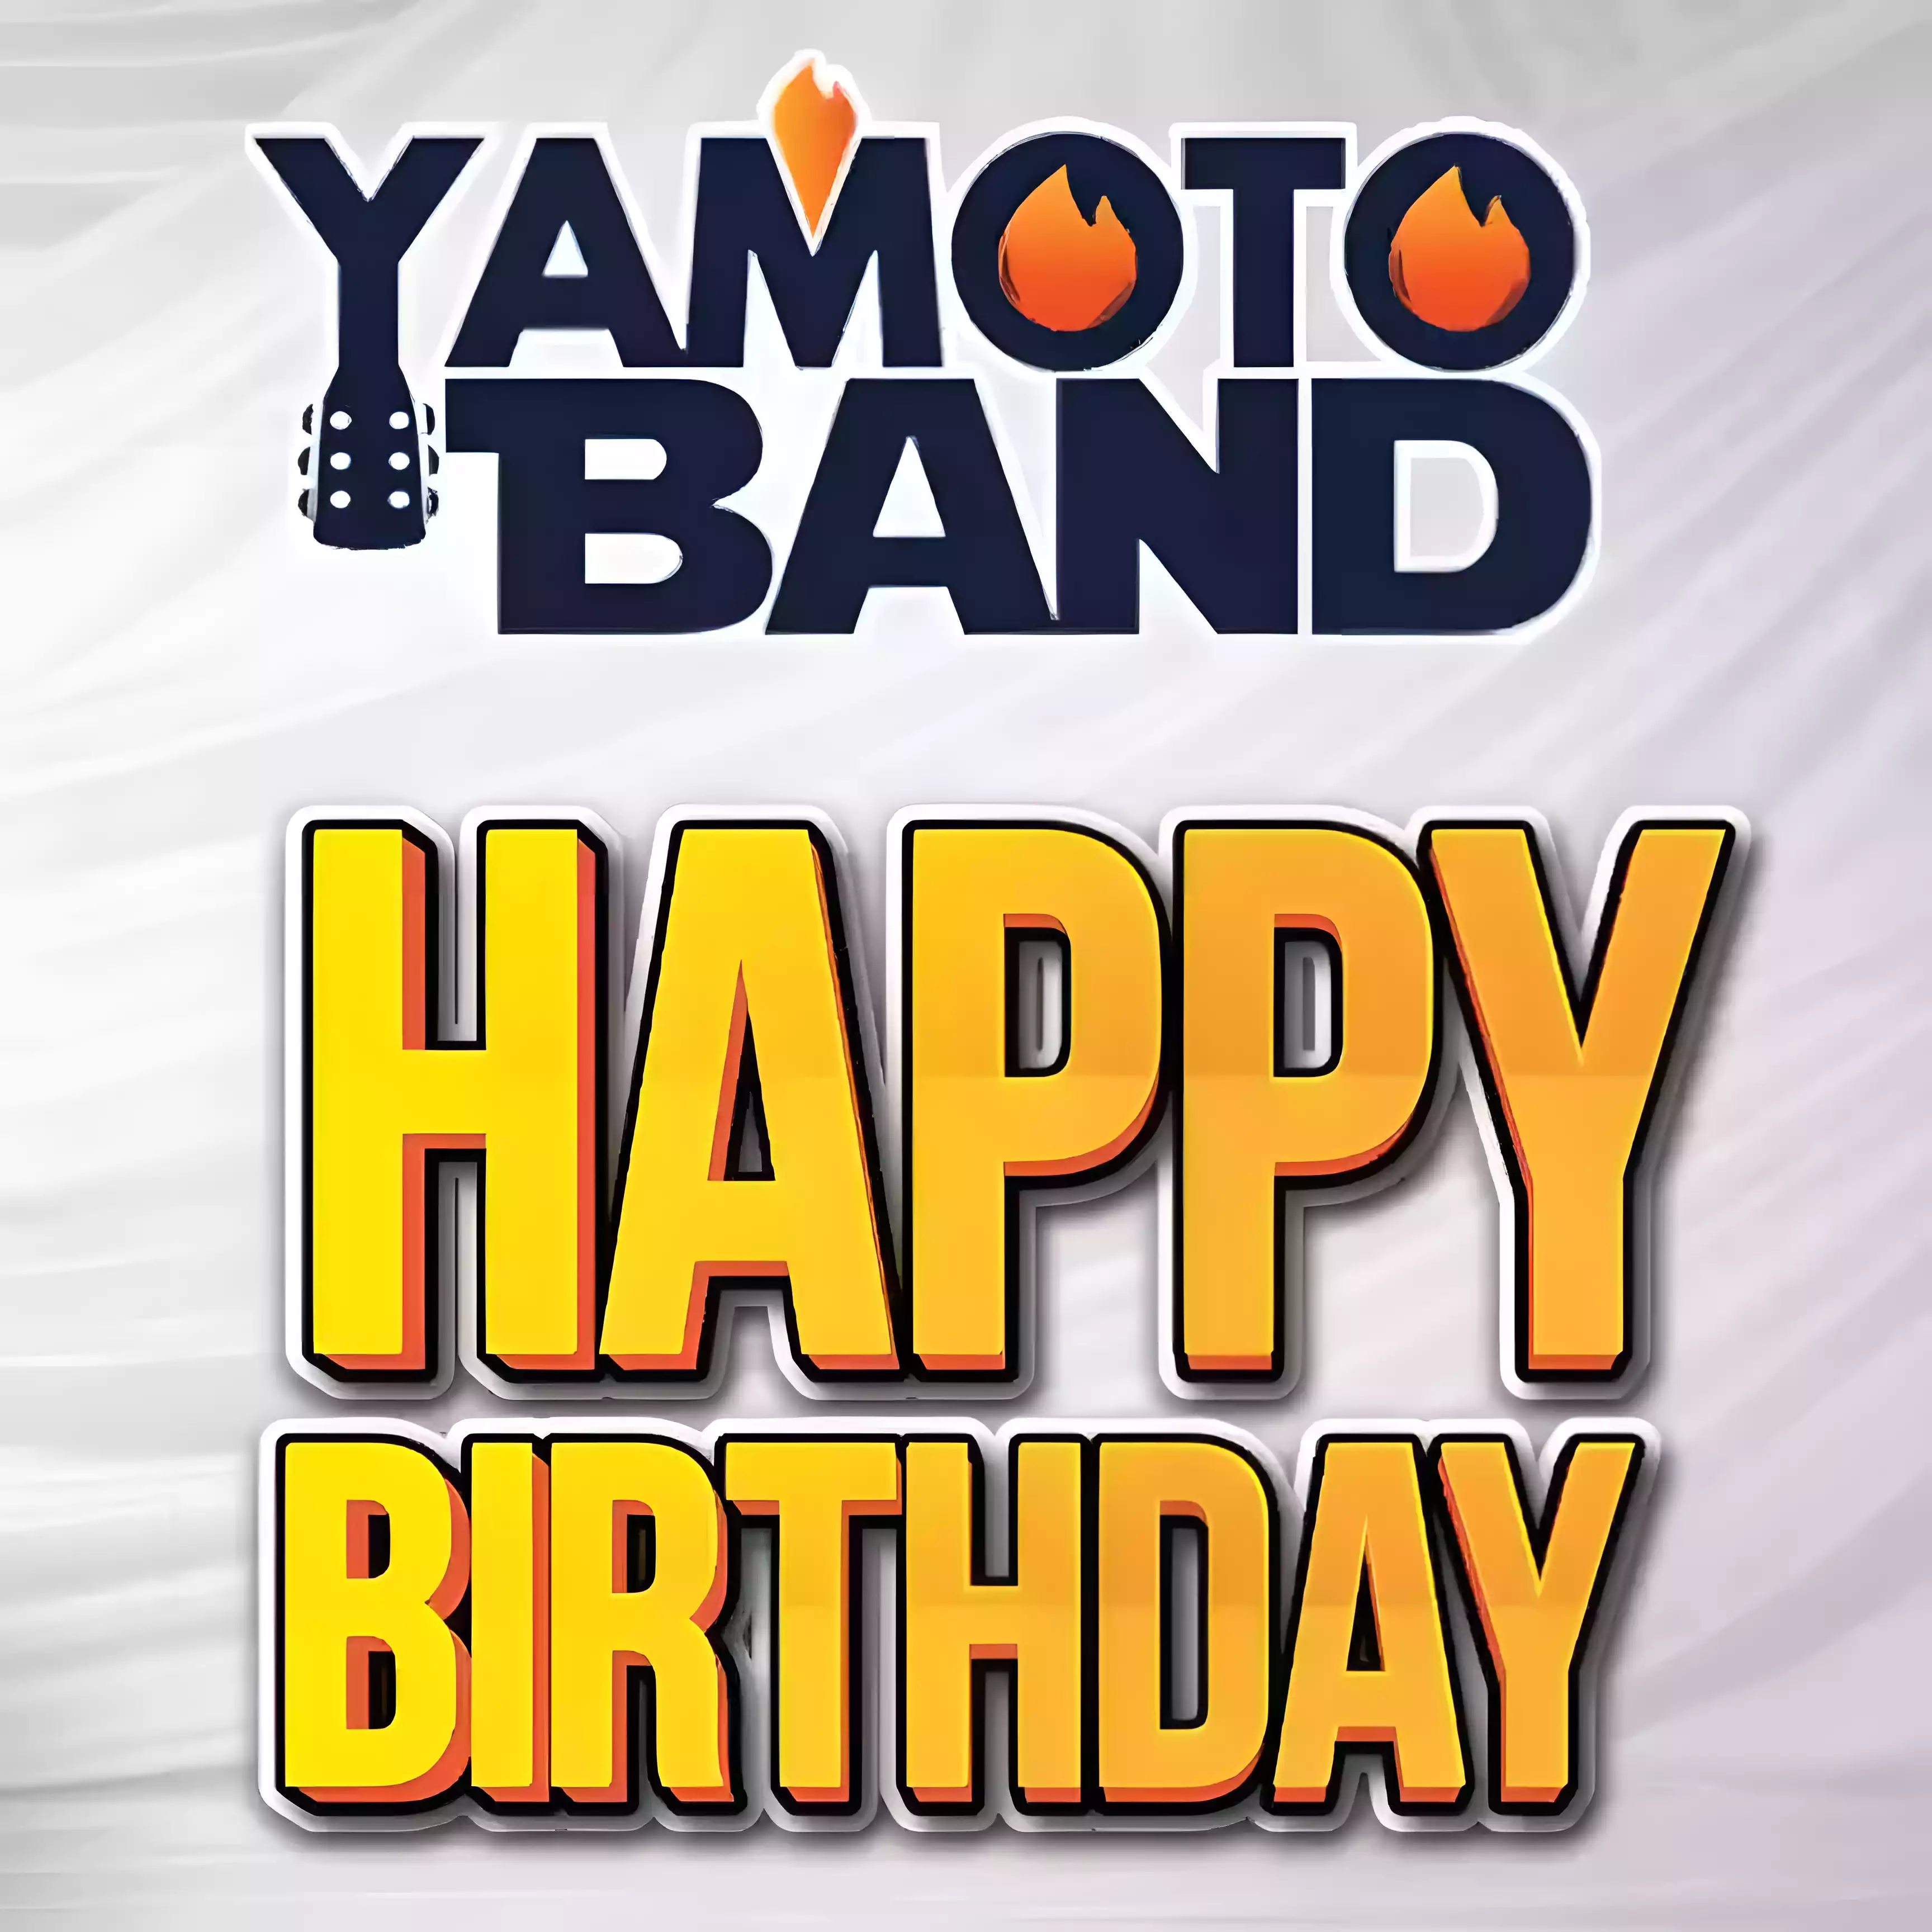 Yamoto Band - Happy Birthday Mp3 Download